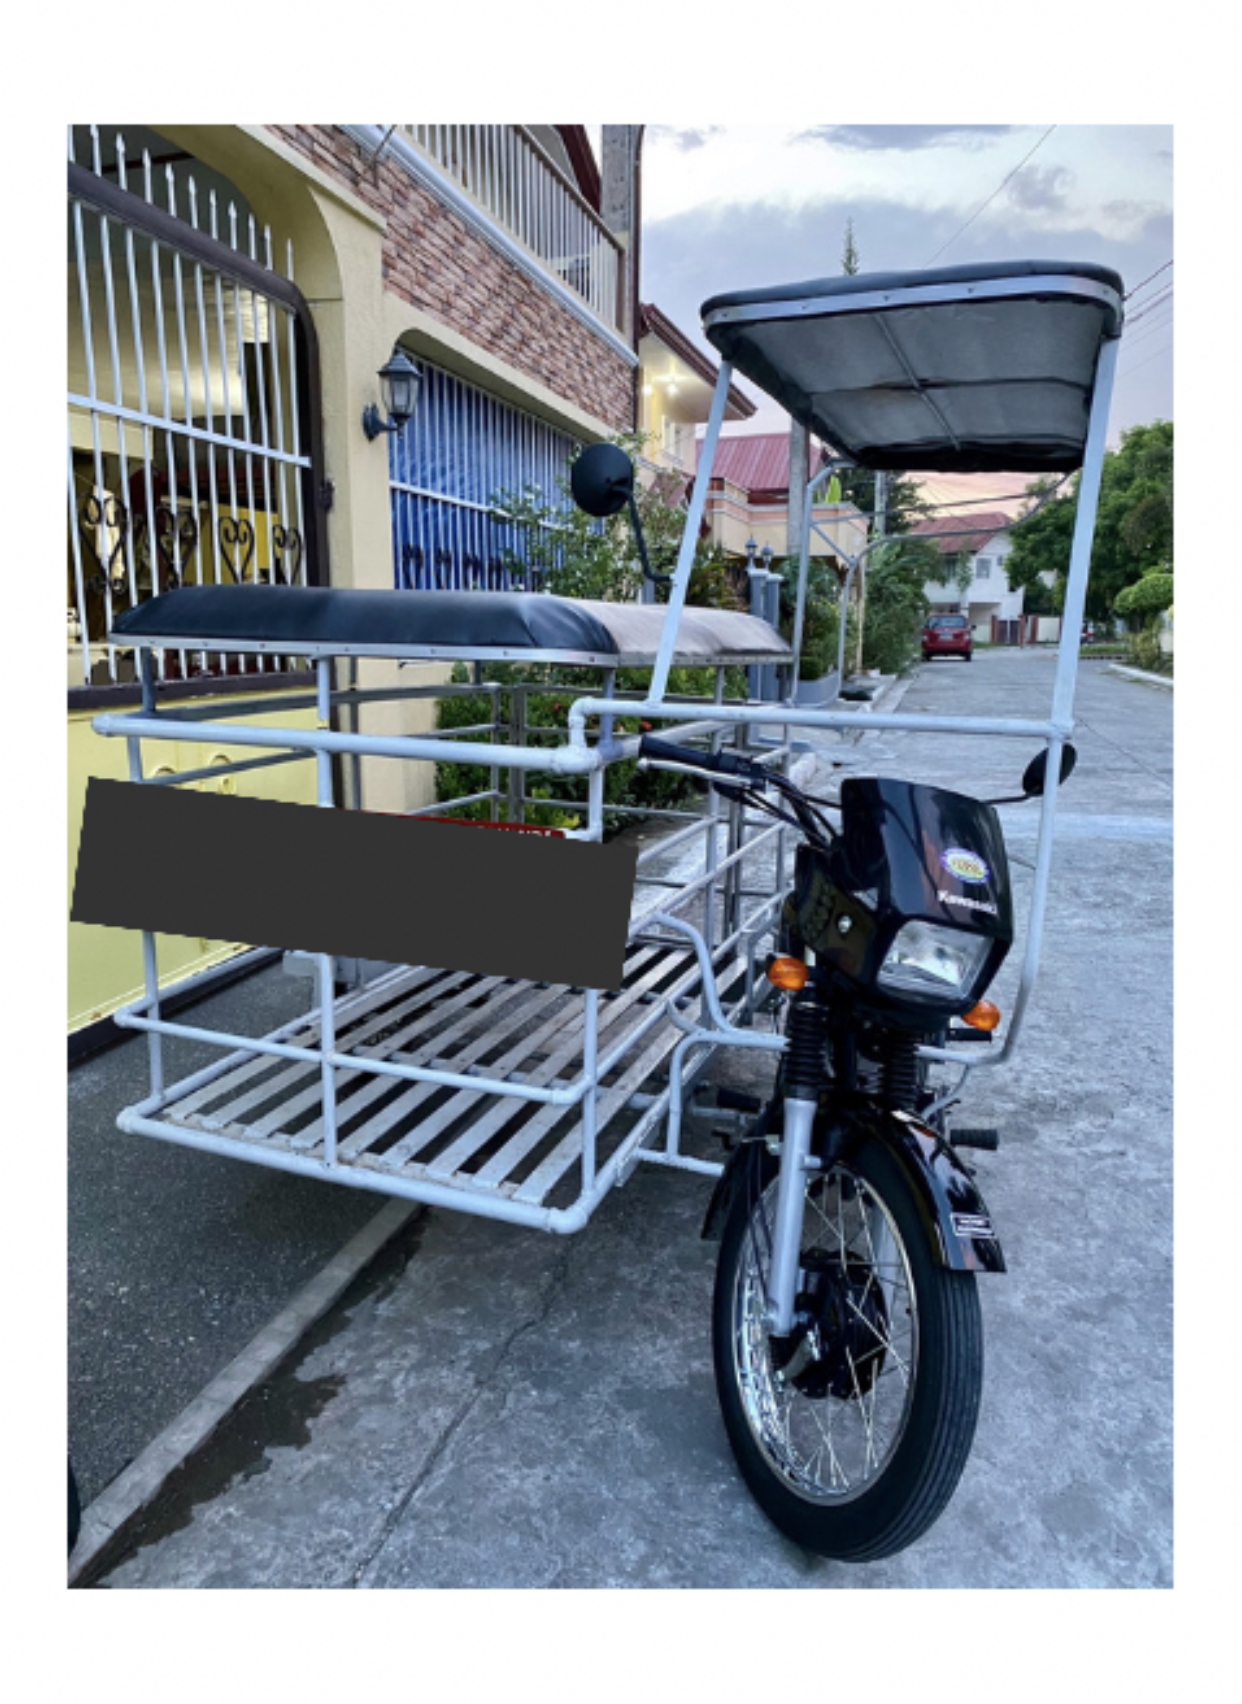 For Sale Kawasaki Motorcycle with Side Car (Kolong Kolong) photo